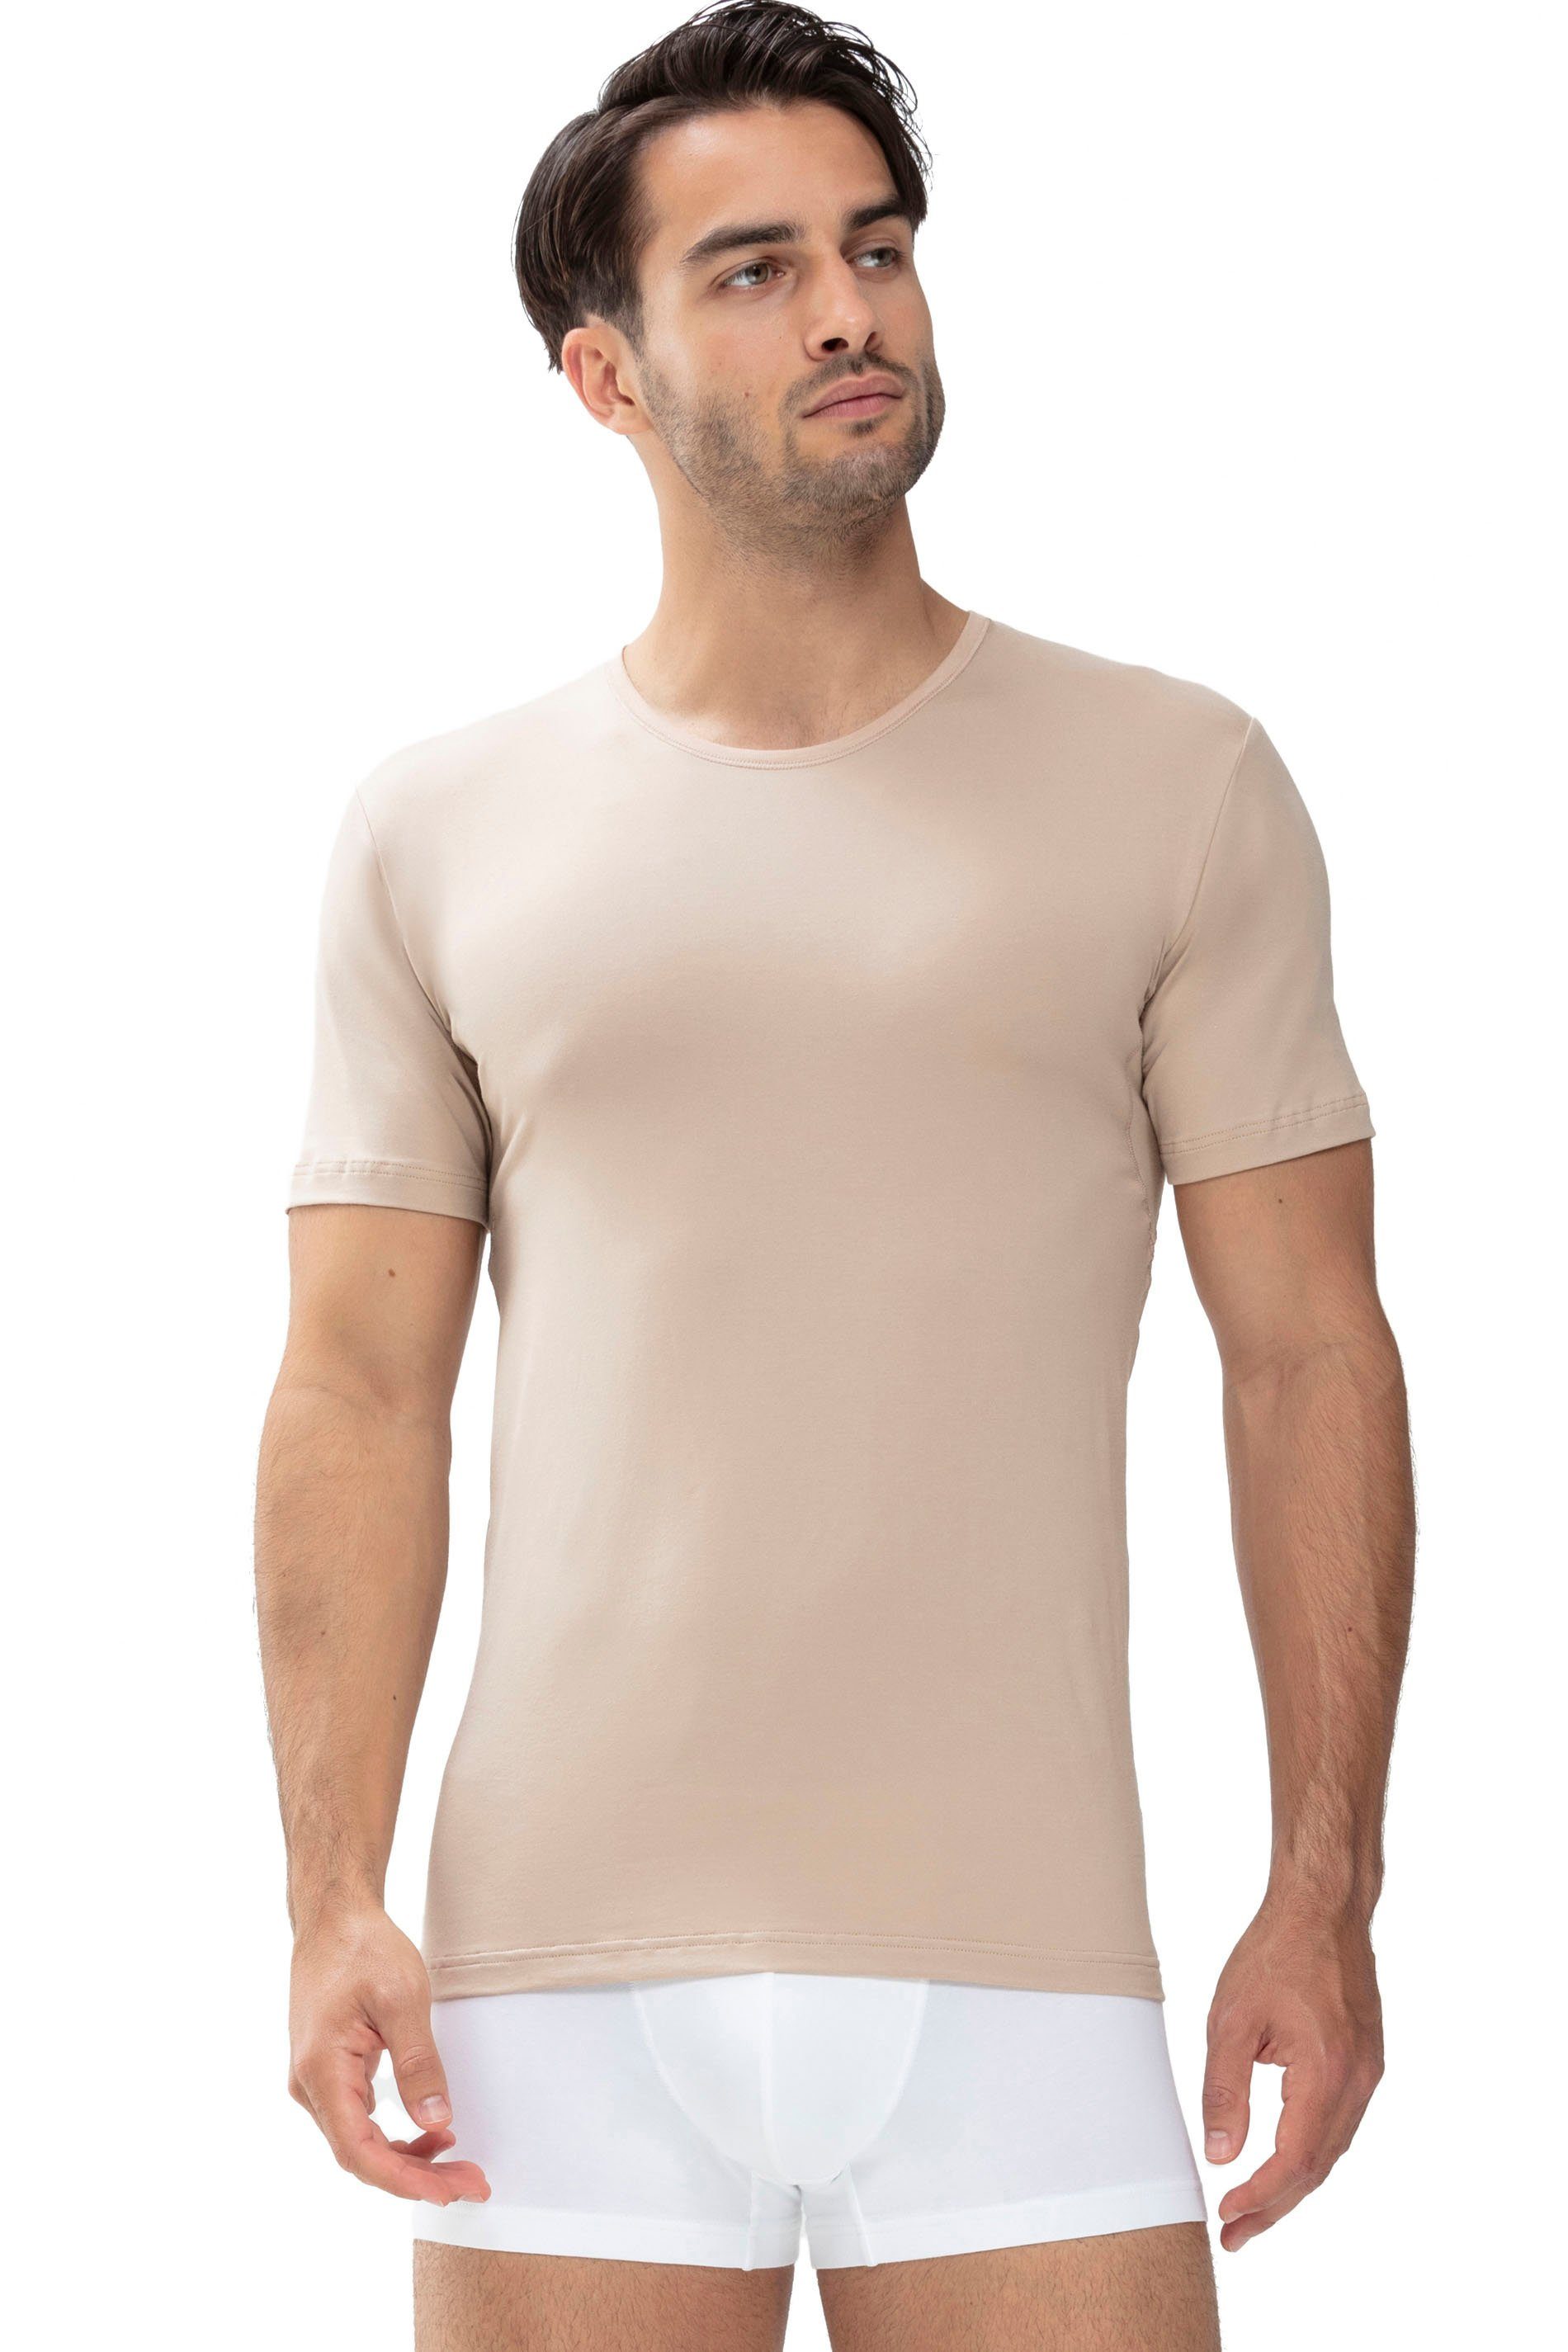 Mey Unterziehshirt Dry Cotton Functional unter dem Businesshemd unsichtbar, Halbarm light skin